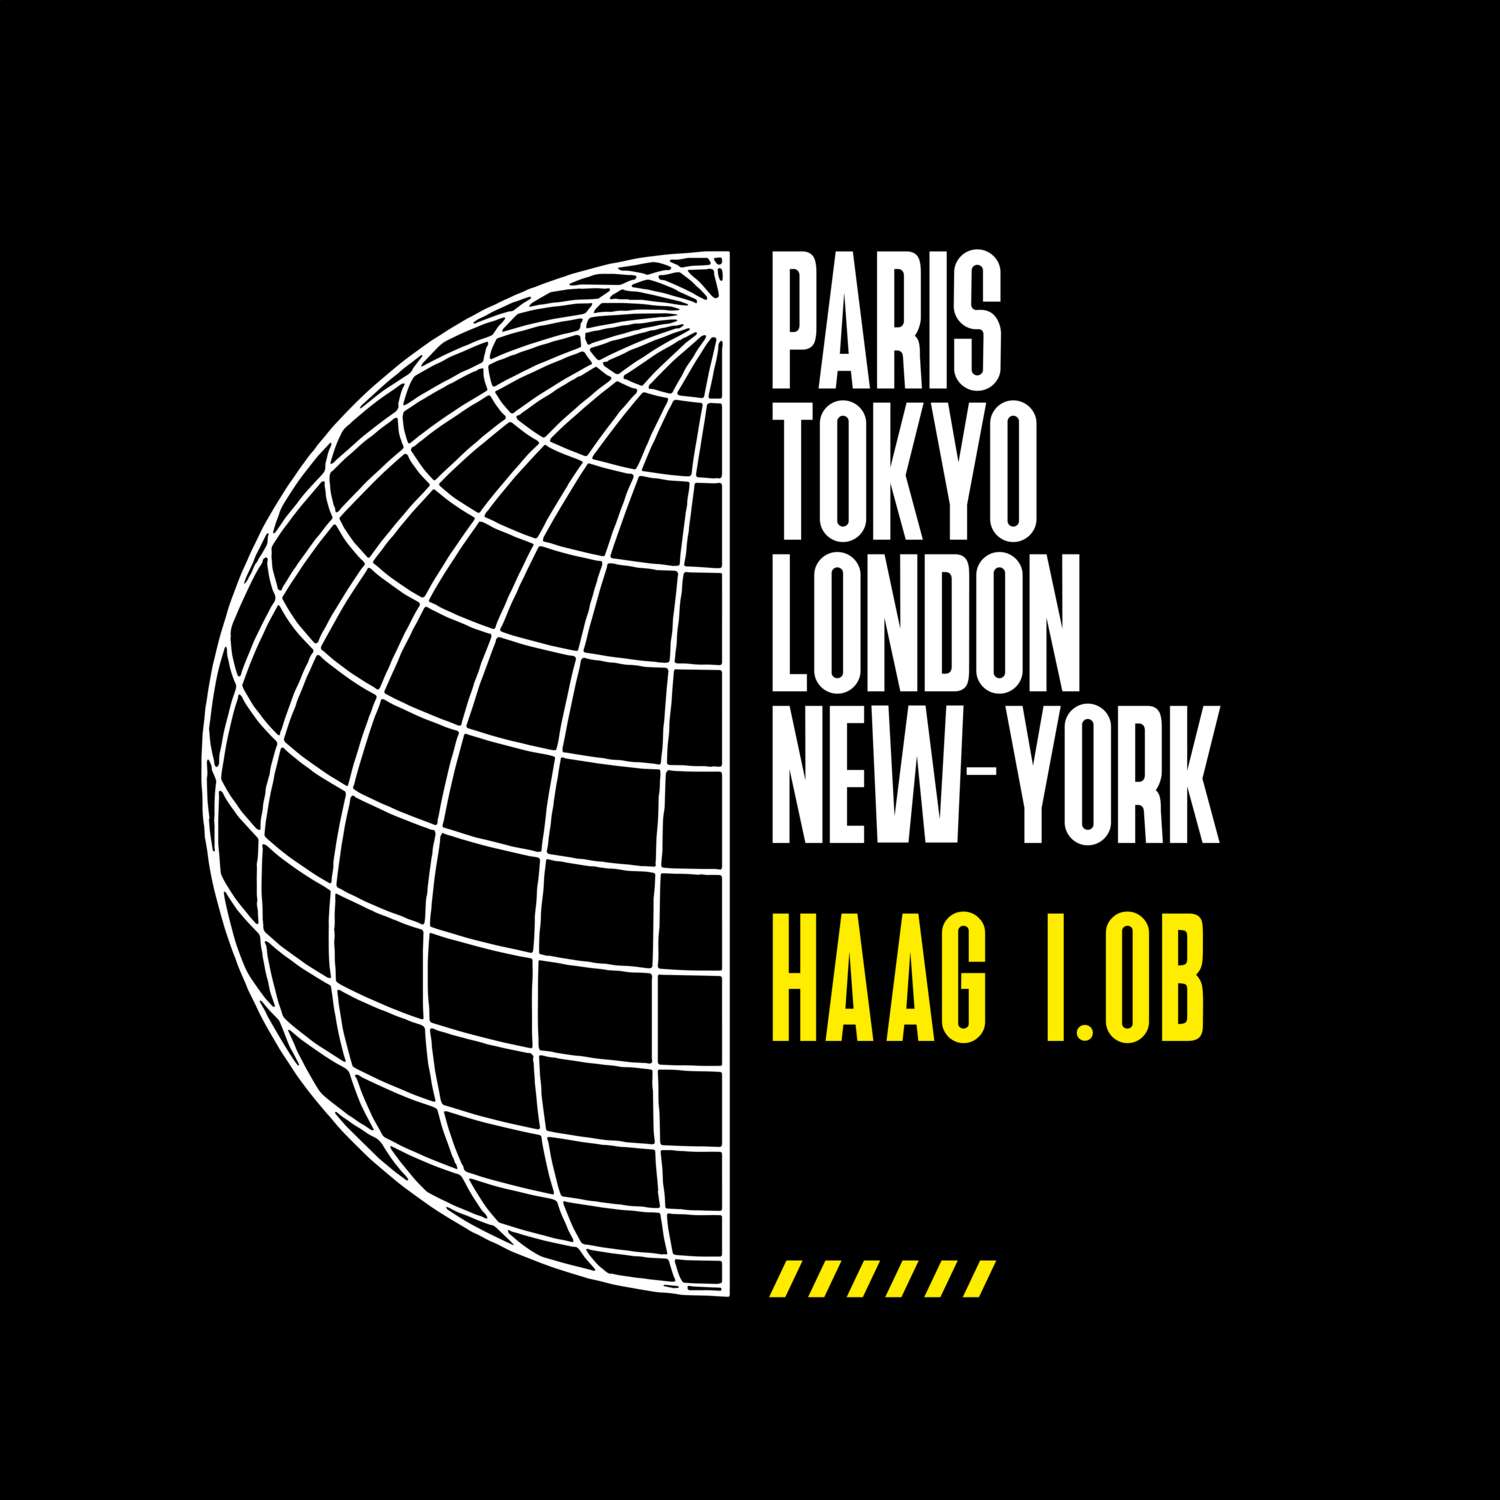 Haag i.OB T-Shirt »Paris Tokyo London«